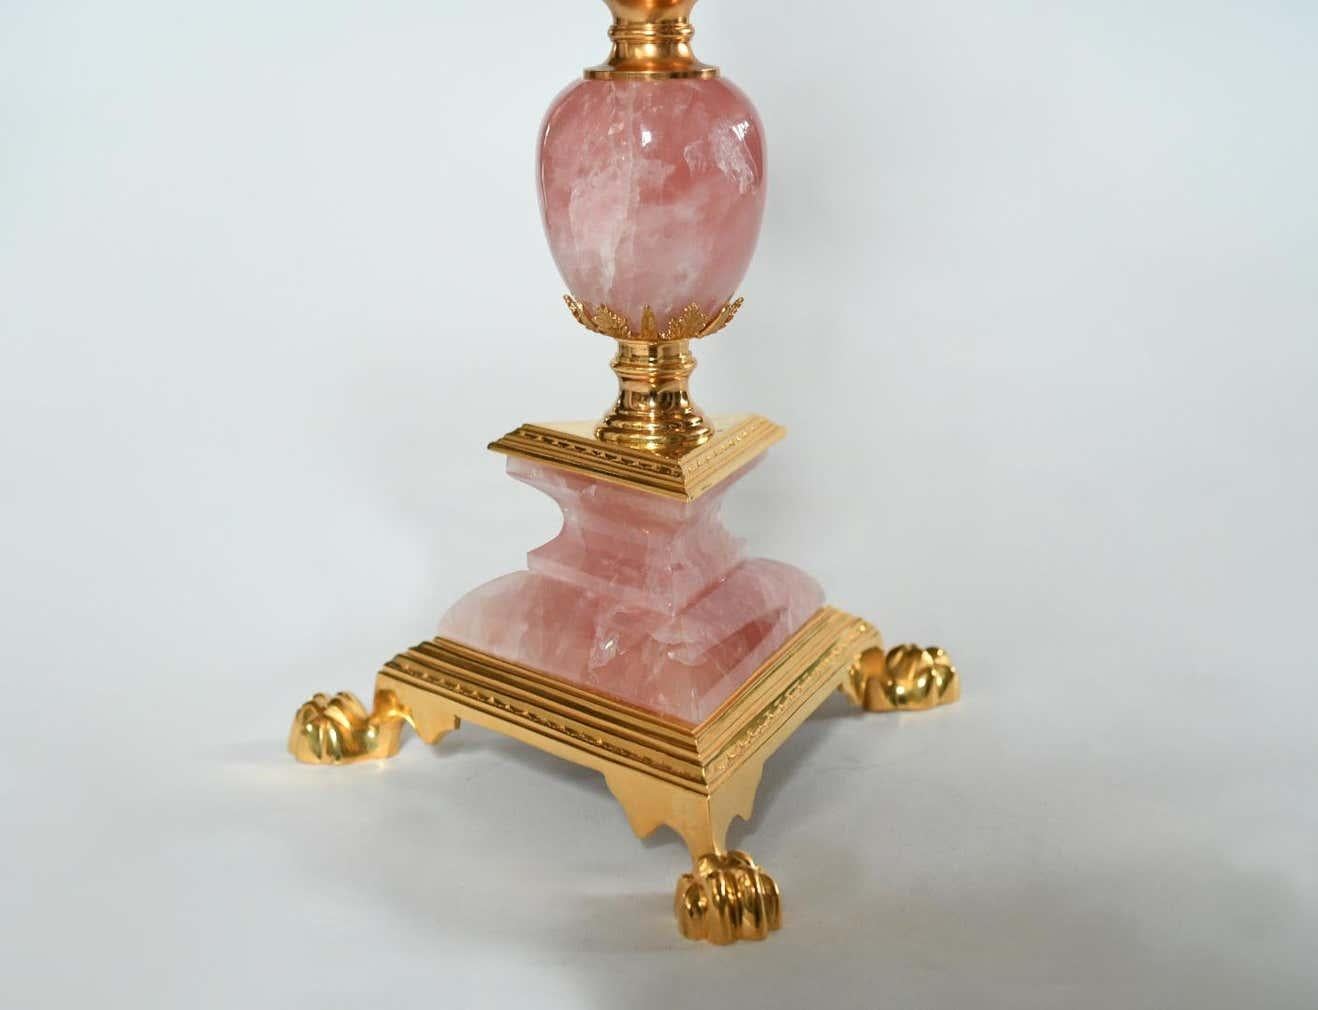 rose quartz lamps for sale